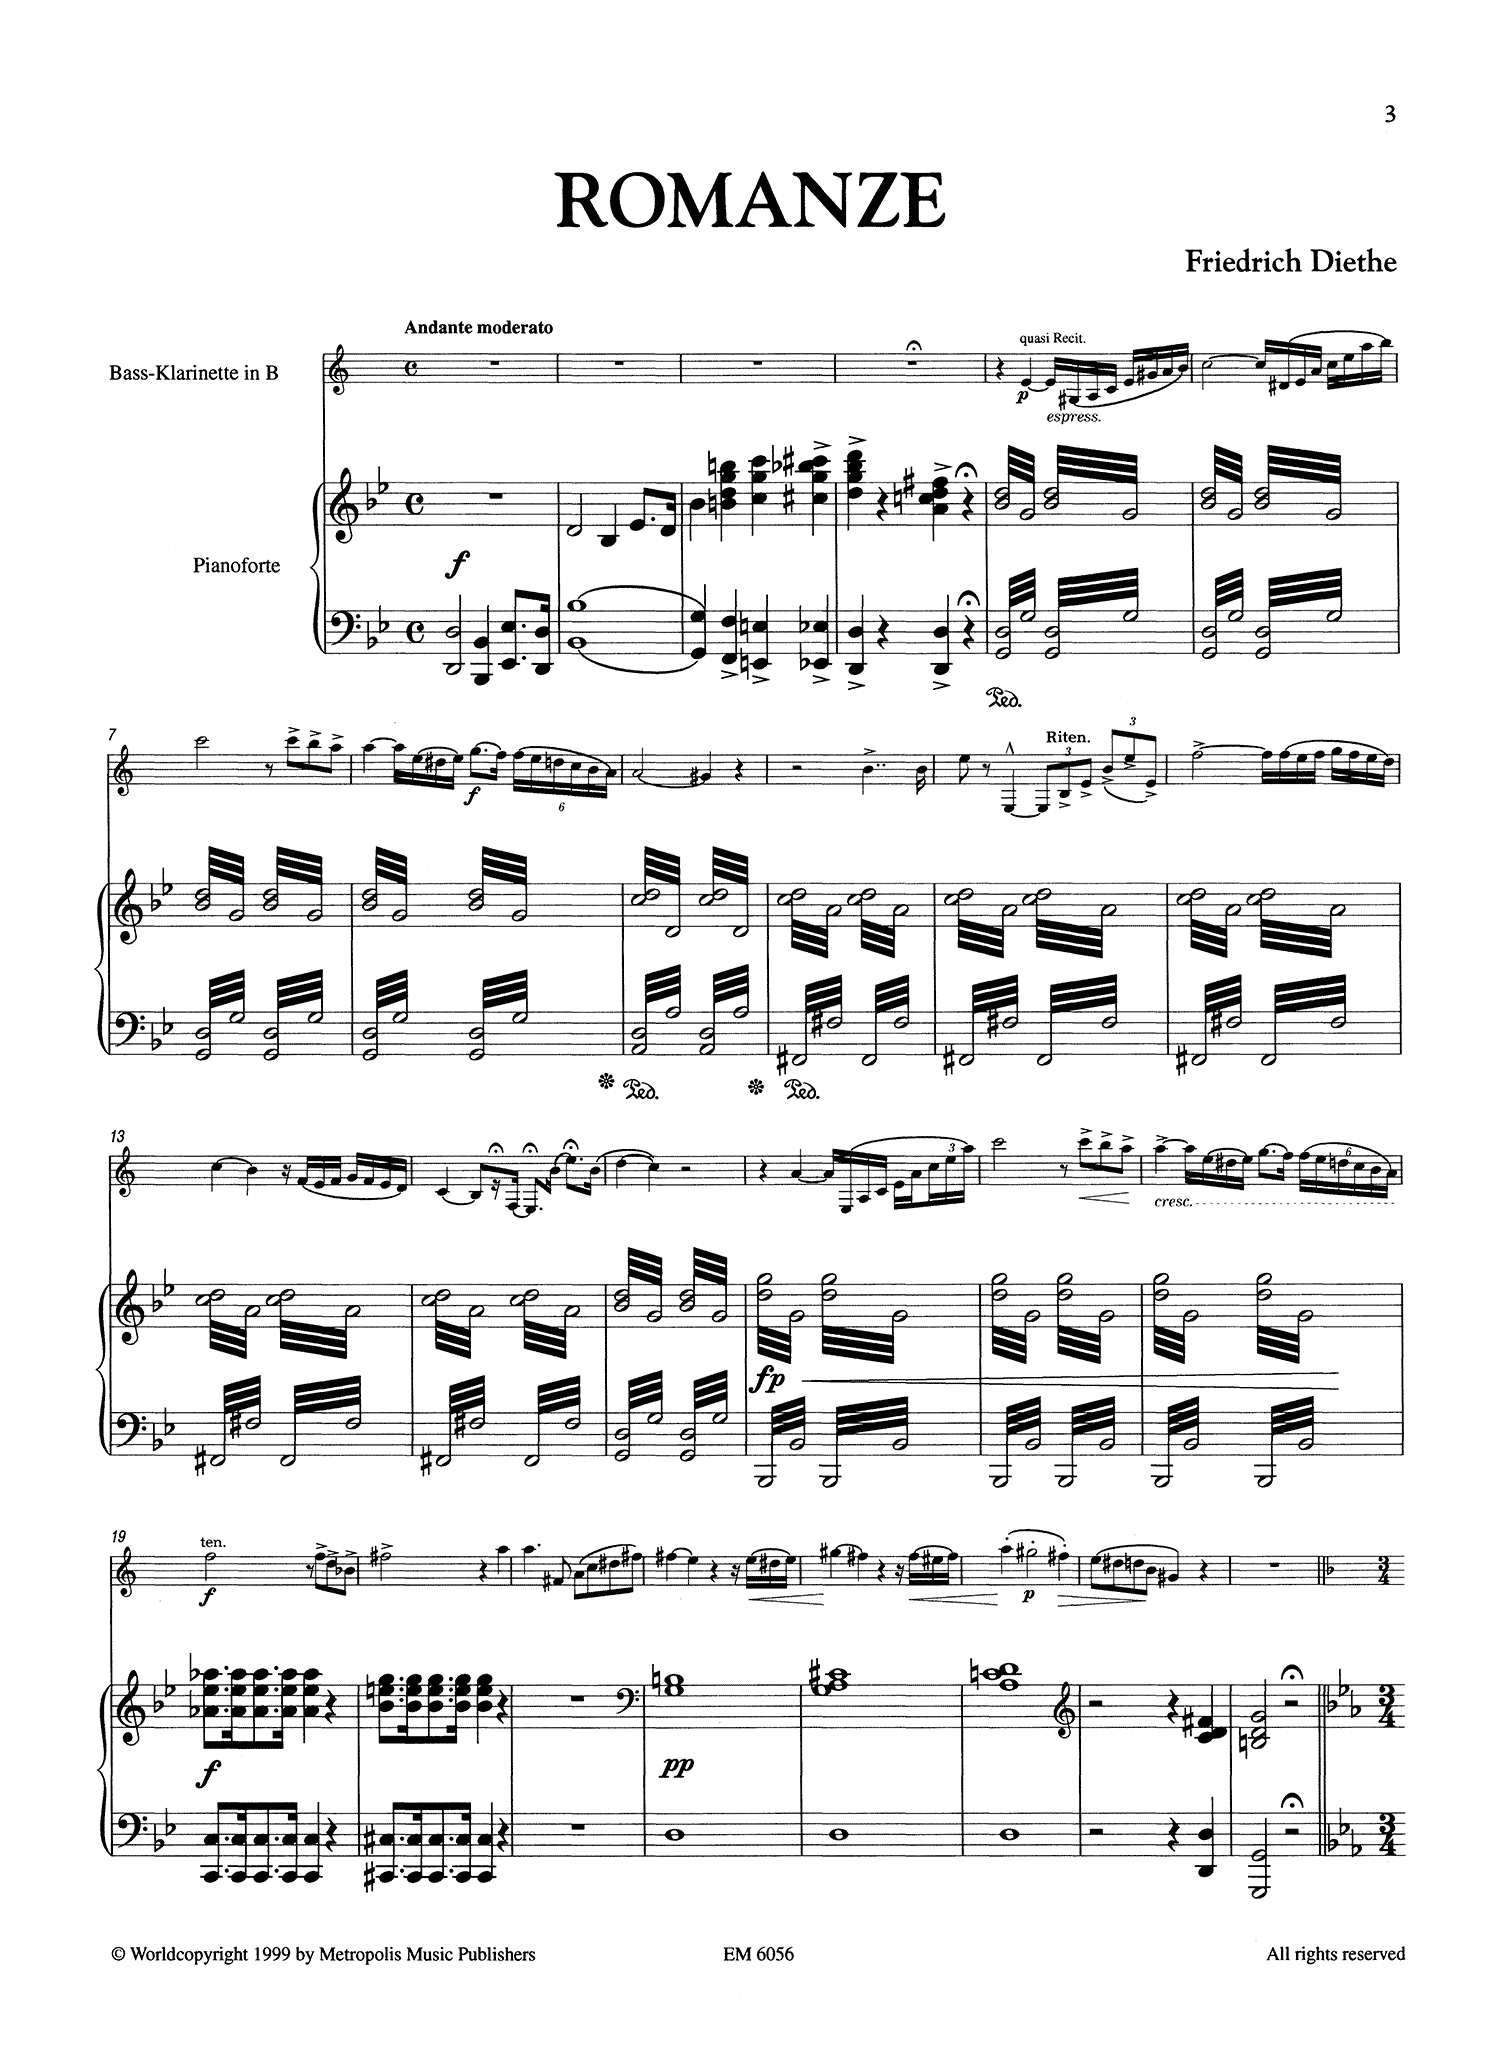 Diethe, Friedrich Romanze Bass Clarinet and Piano score